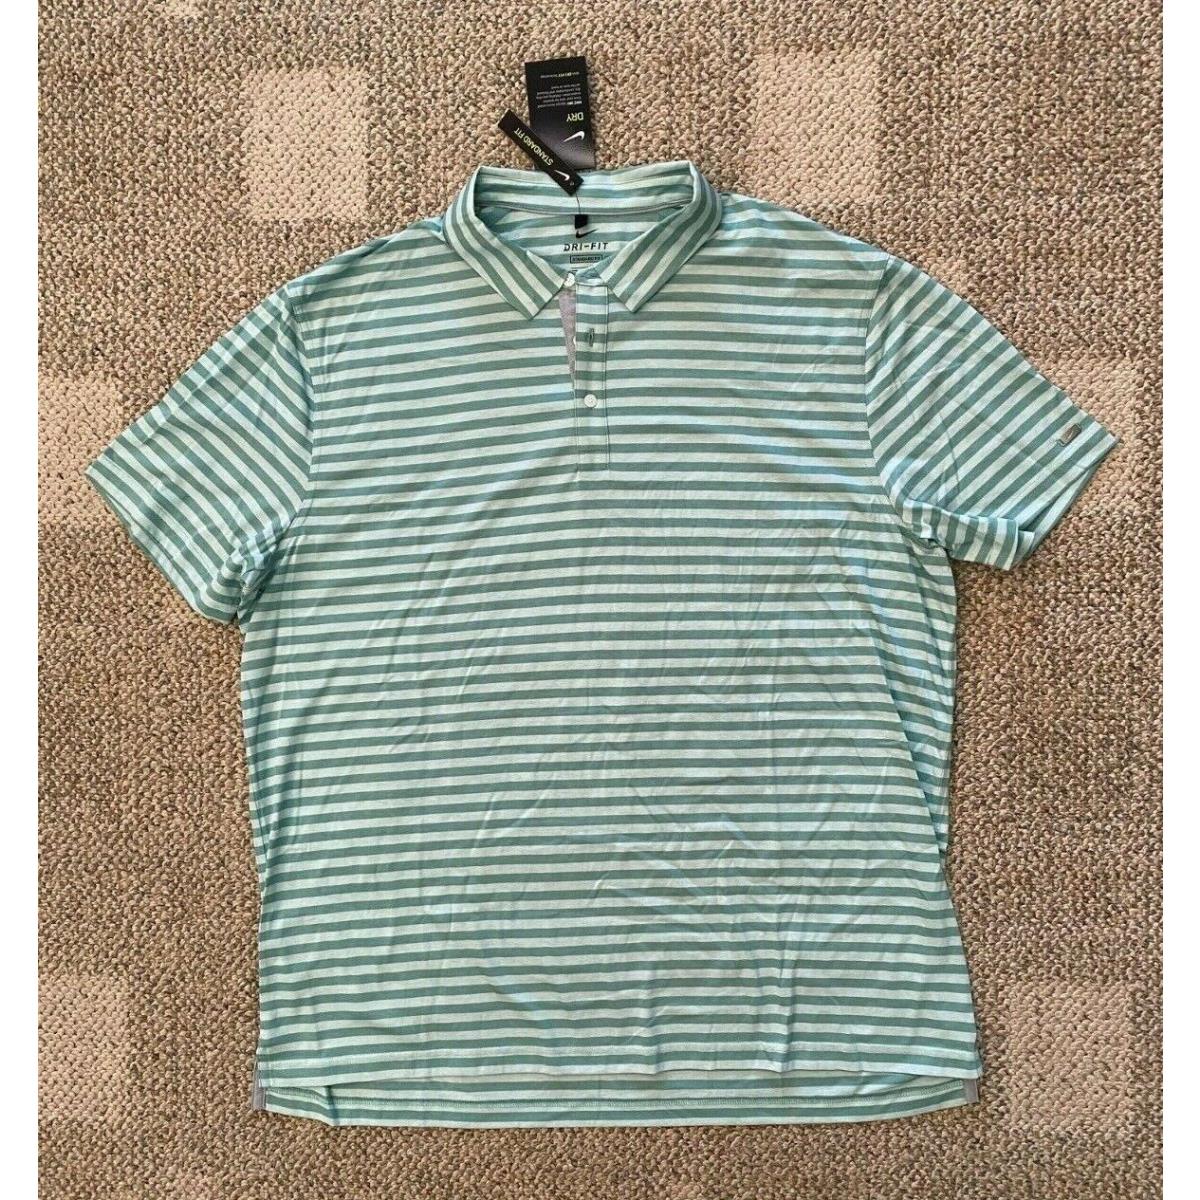 Mens Xxl 2XL Nike Dry Player Striped Golf Polo Shirt Green Stripe CU9862-316